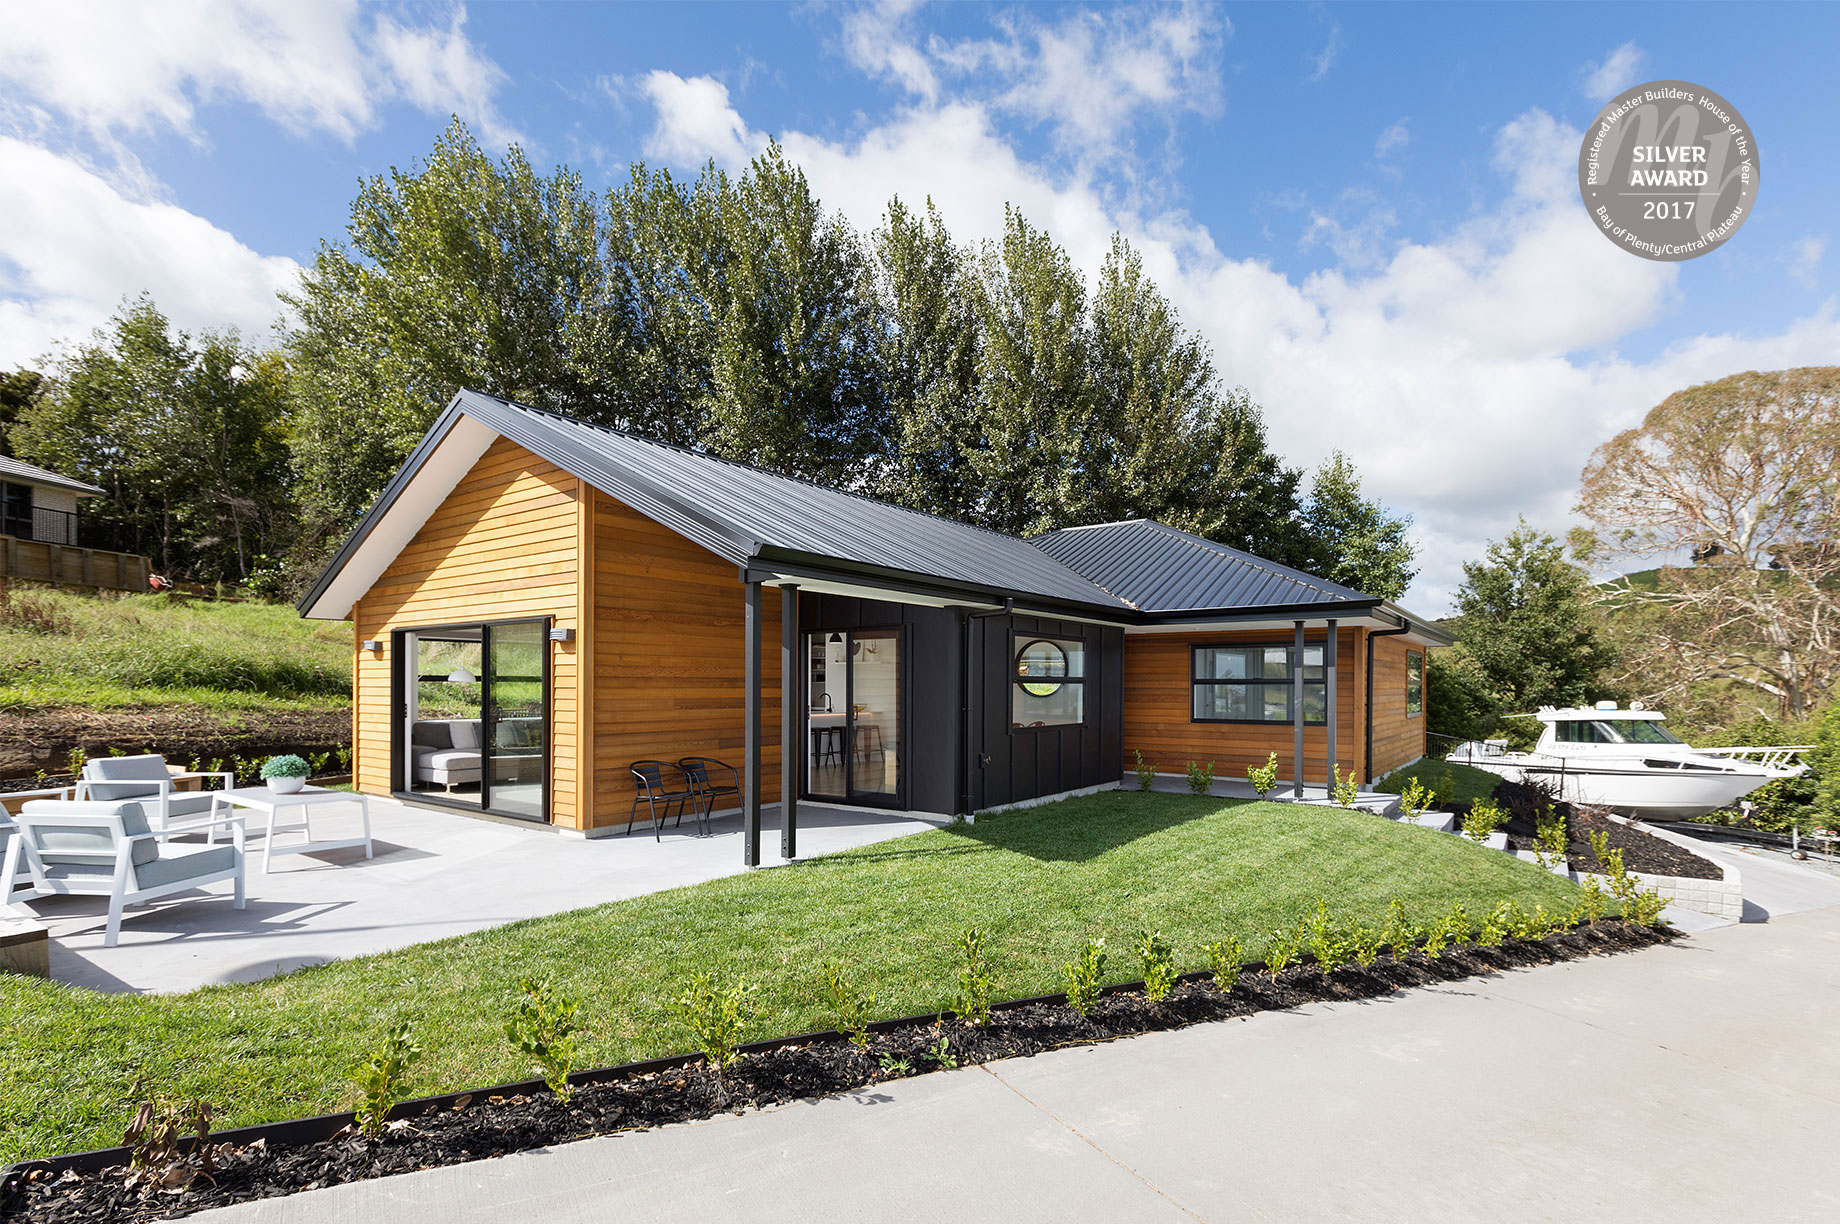 Award winning rural house exterior